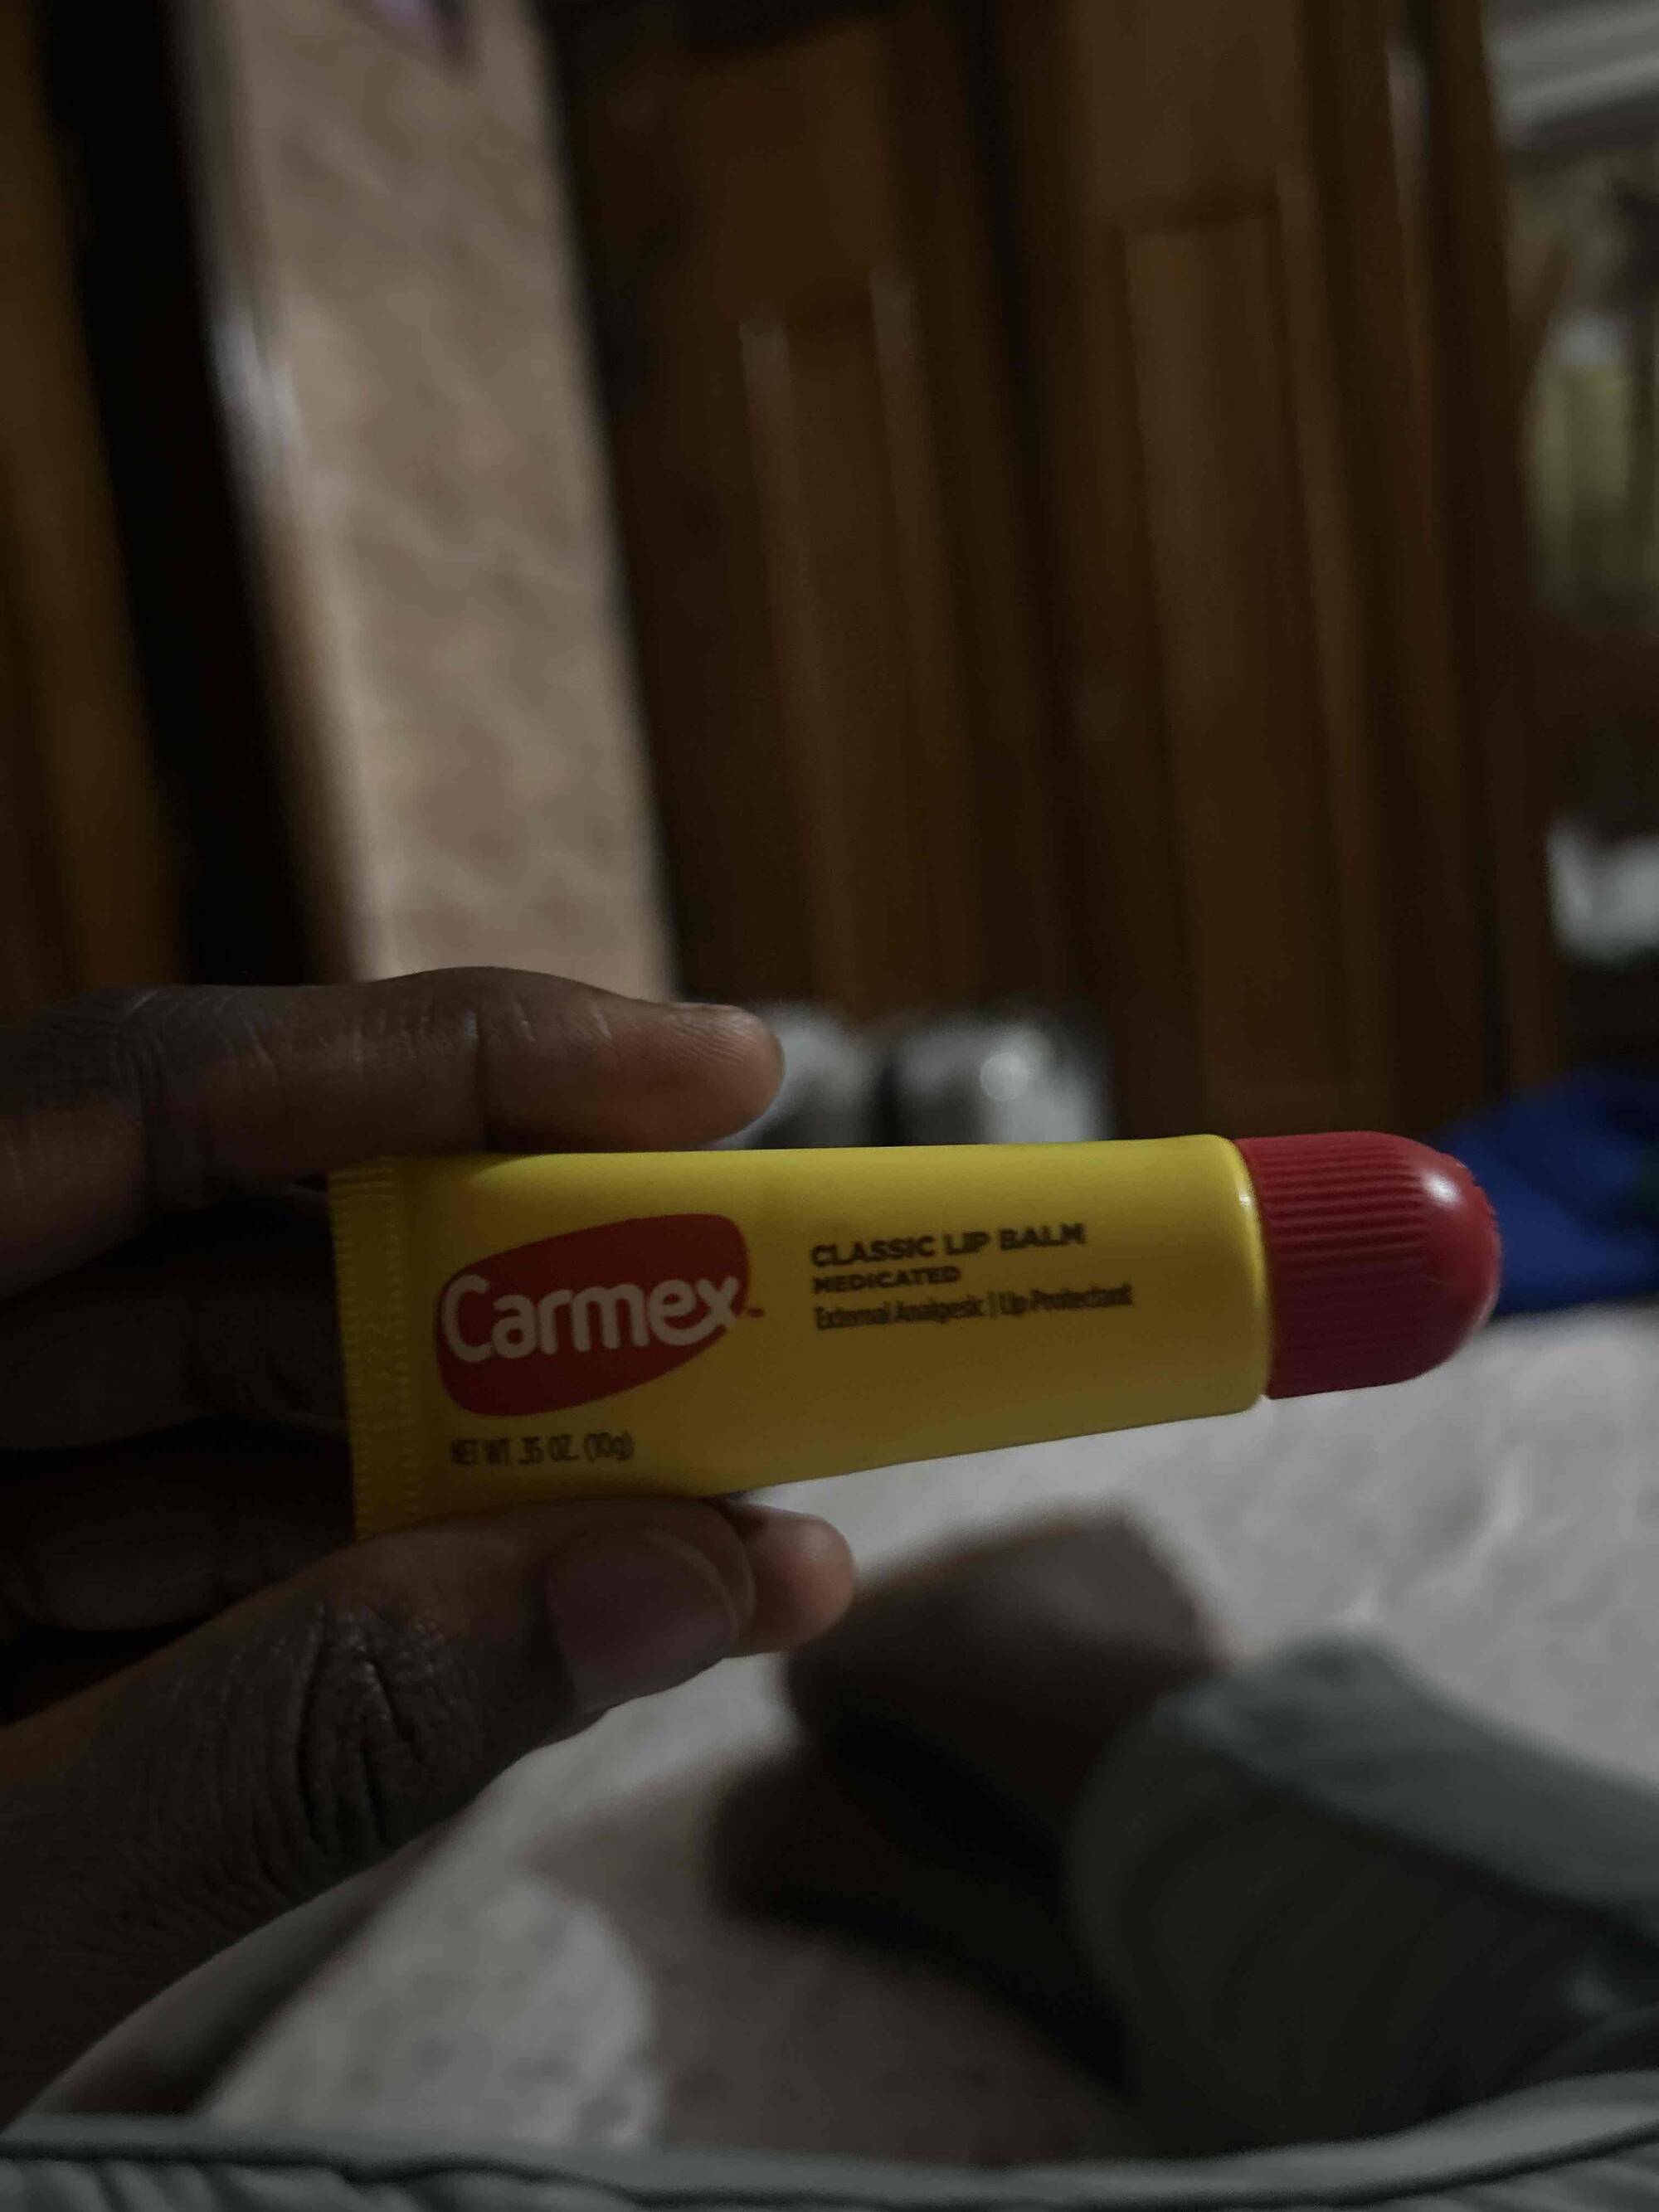 CARMEX - Classic lip balm